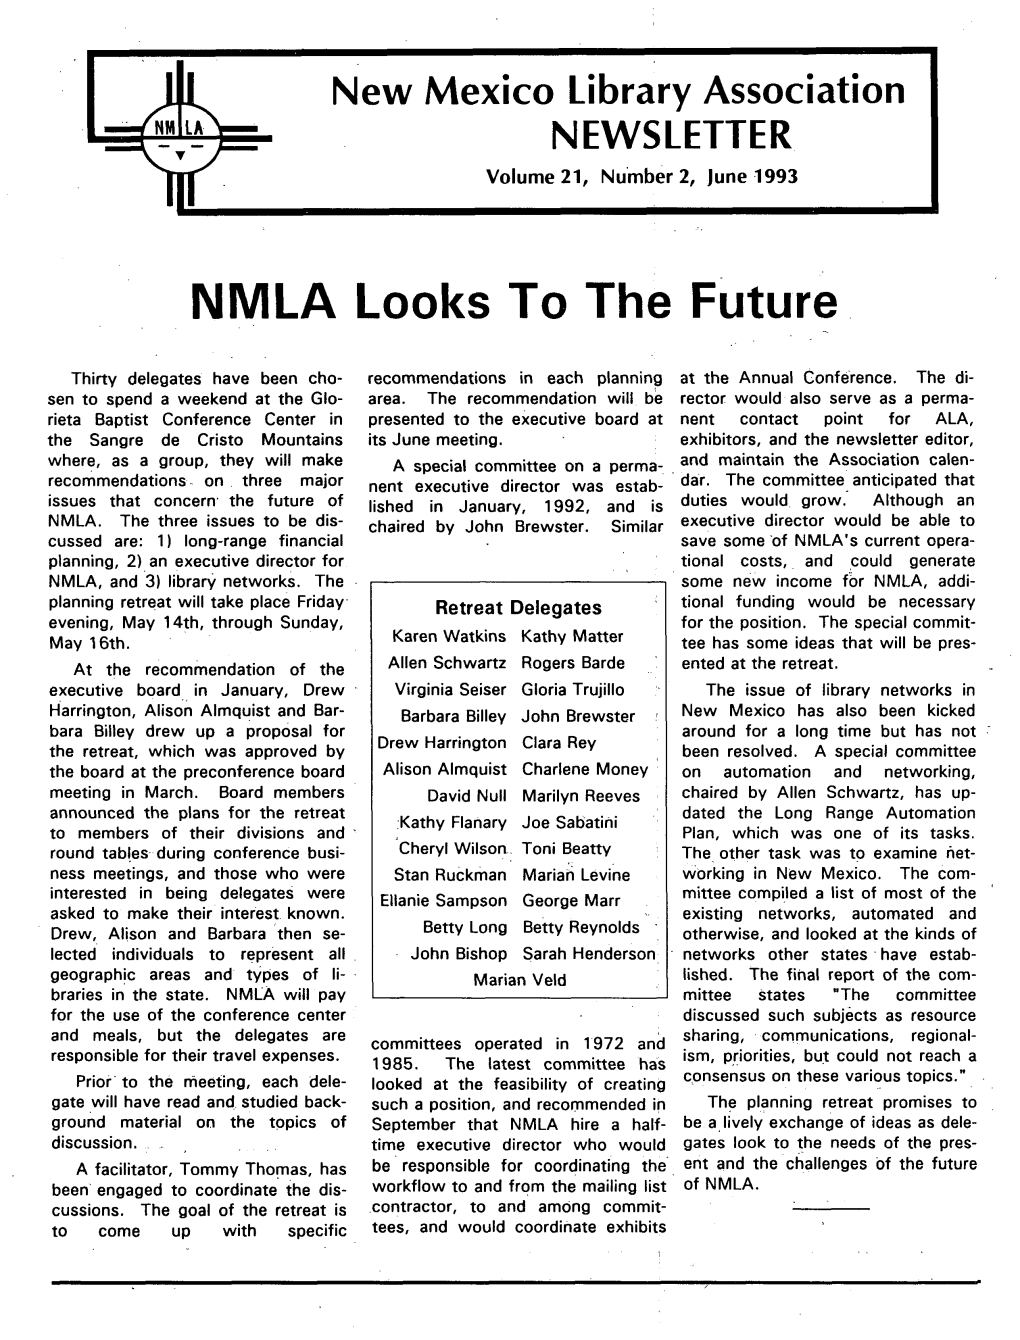 NMLA Looks to the Future